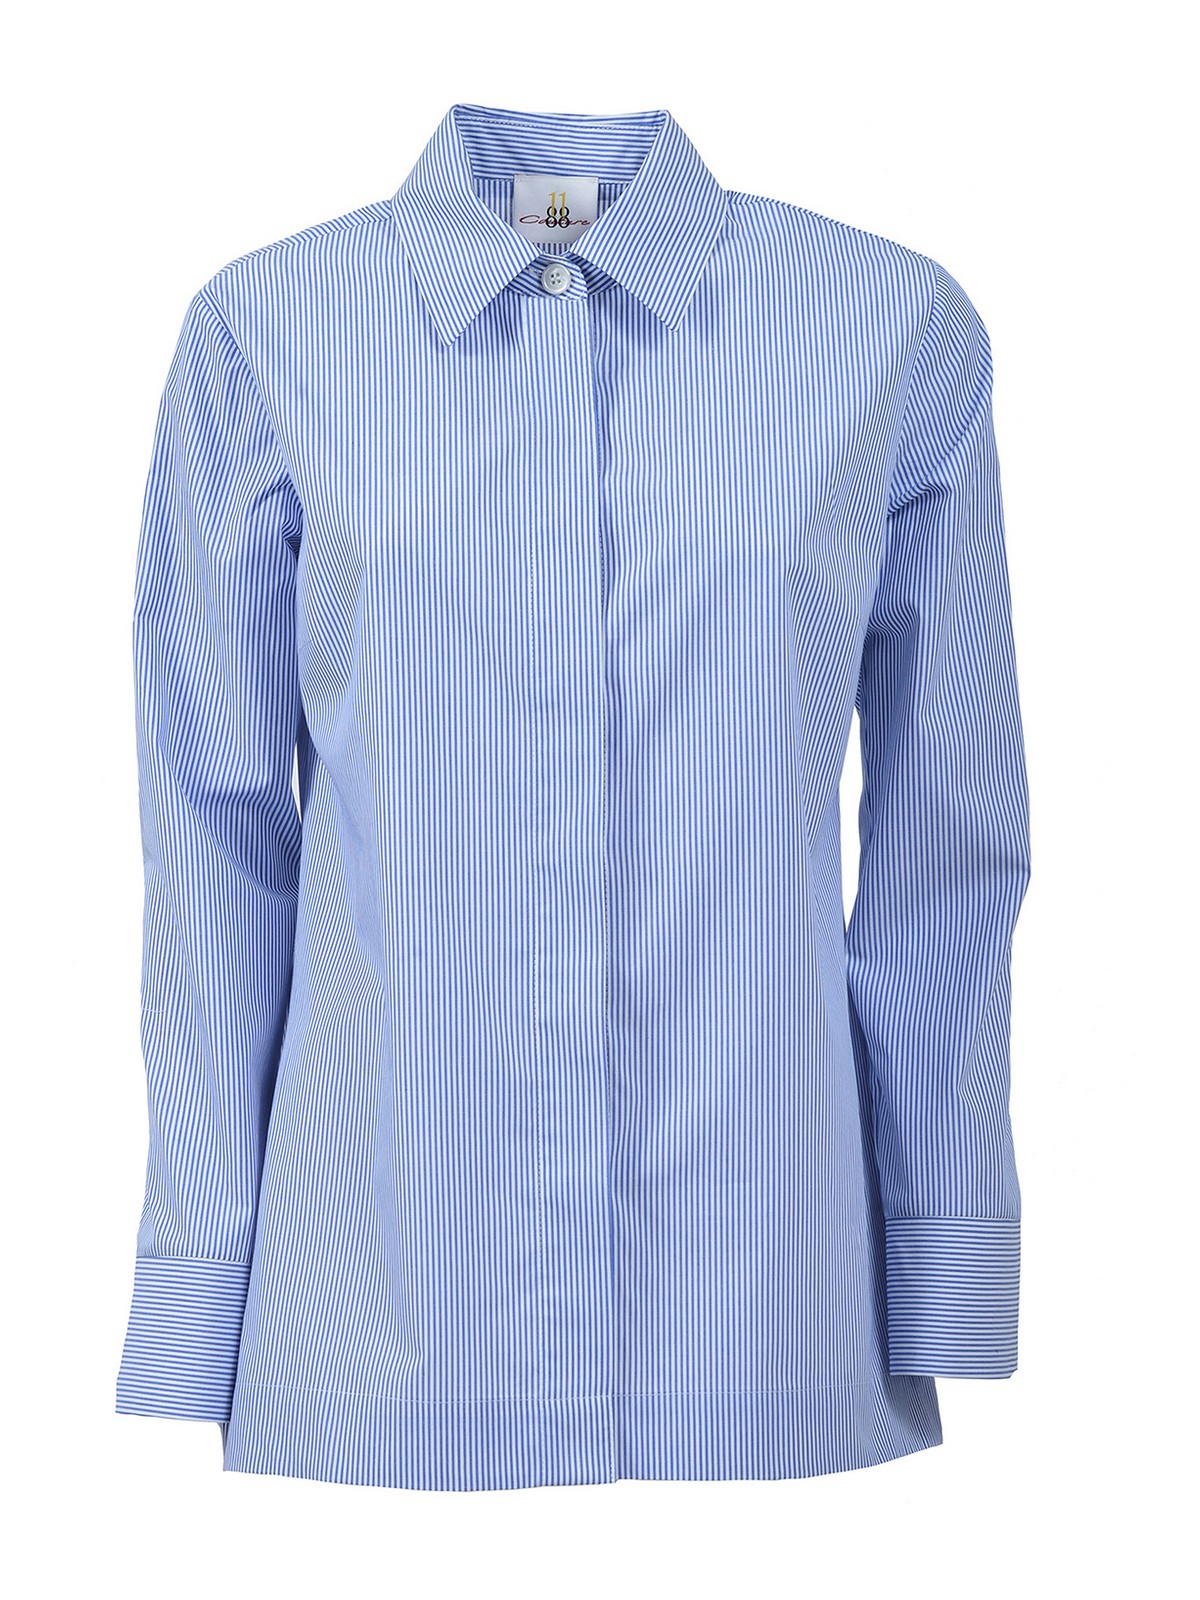 Eleven88 Striped Pattern Cotton Shirt In Light Blue